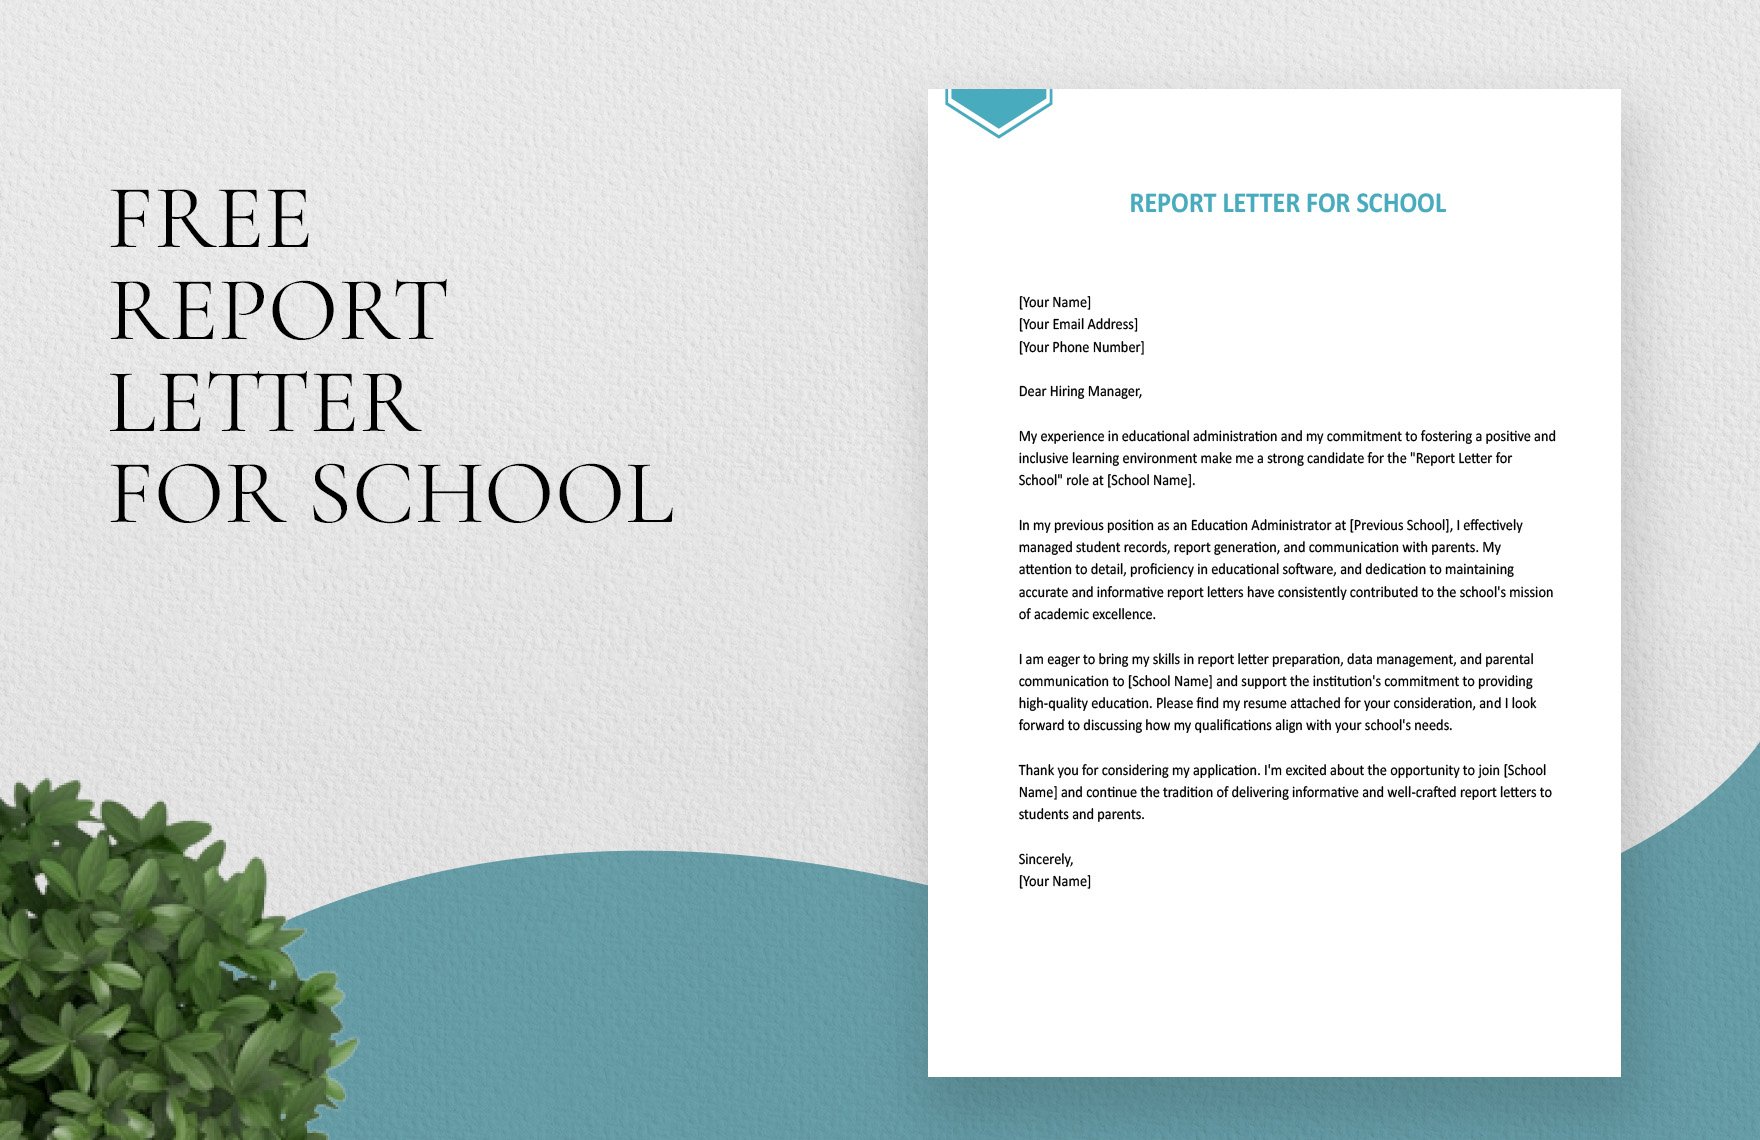 Report Letter For School in Word, Google Docs